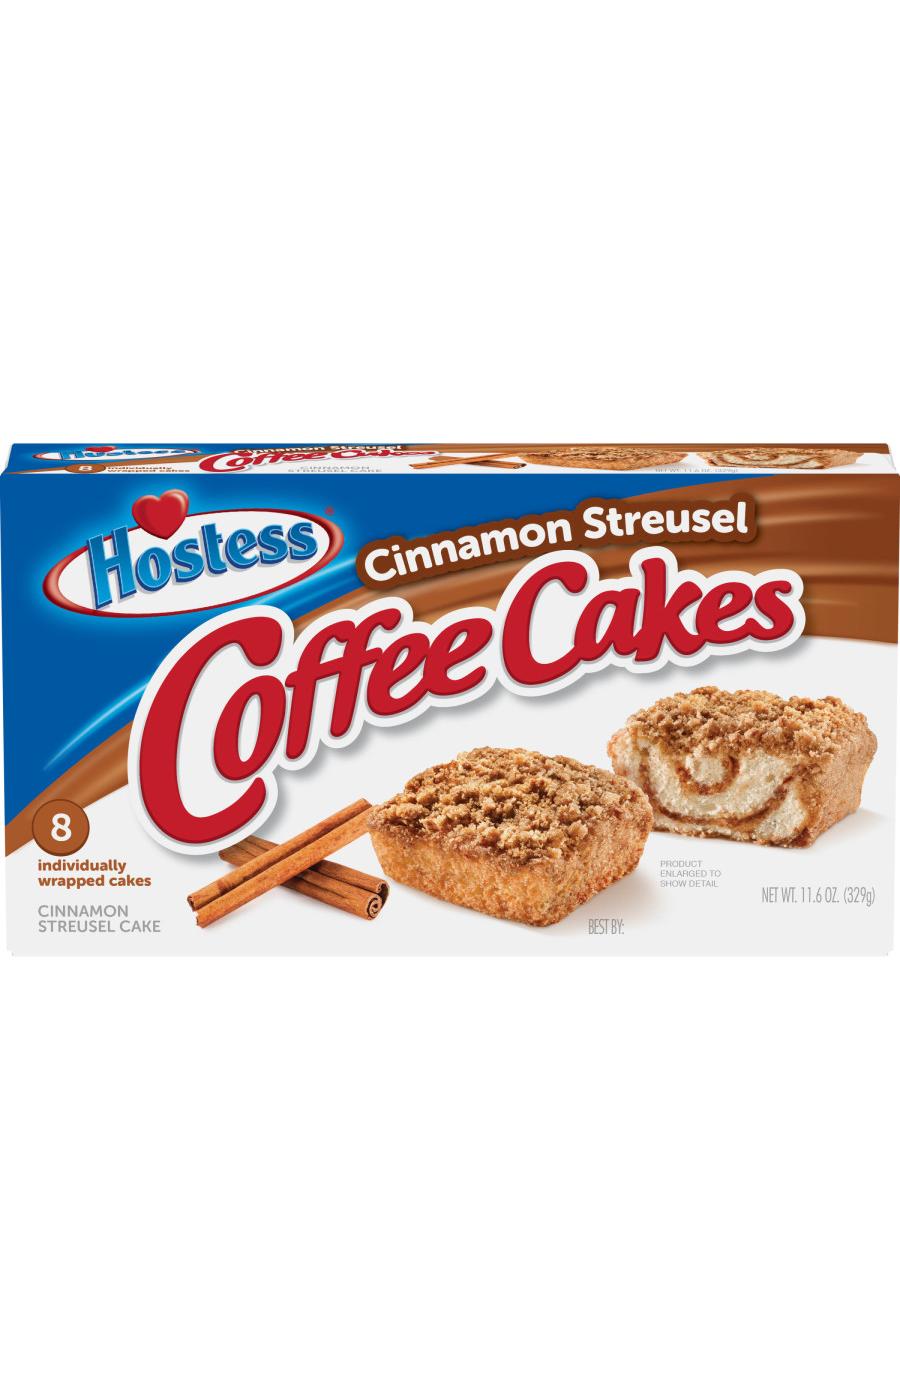 Hostess Cinnamon Streusel Coffee Cakes; image 5 of 7